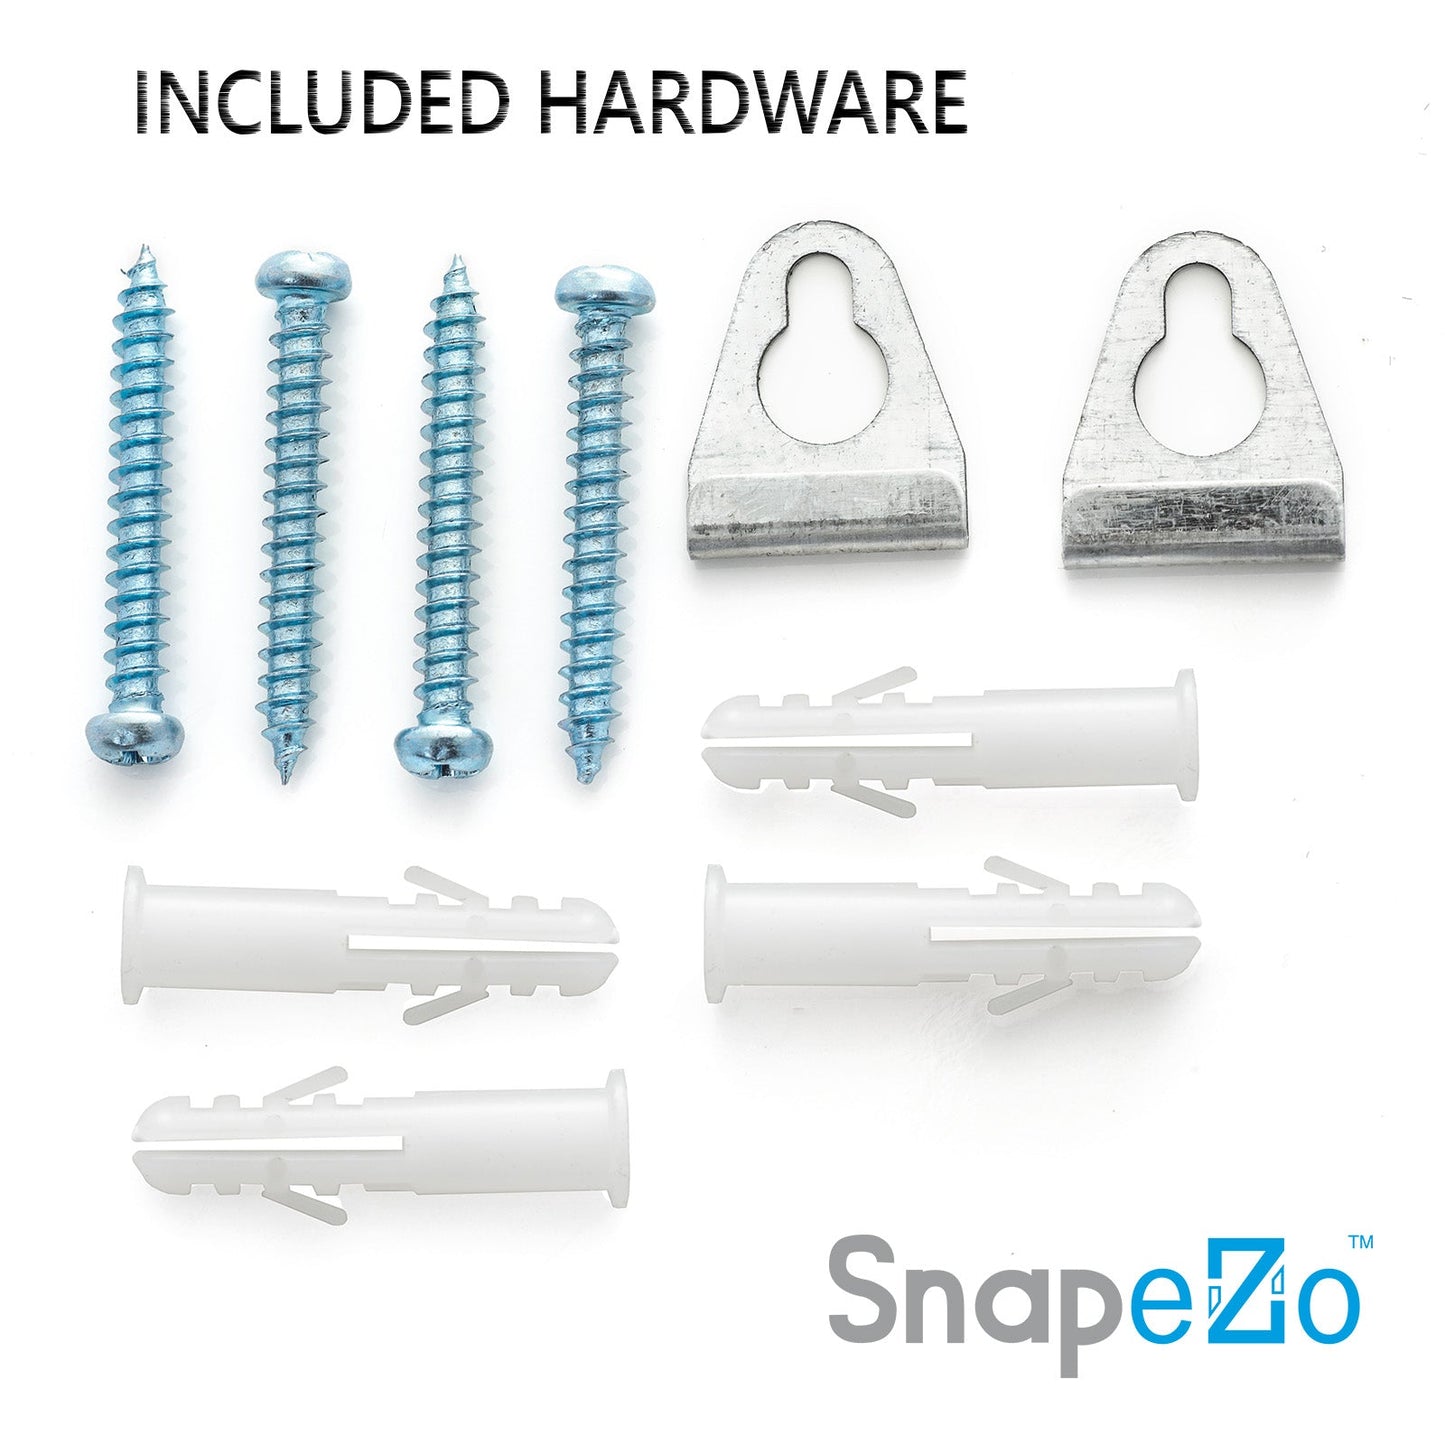 20x30 Silver SnapeZo® Snap Frame - 1.25" Profile